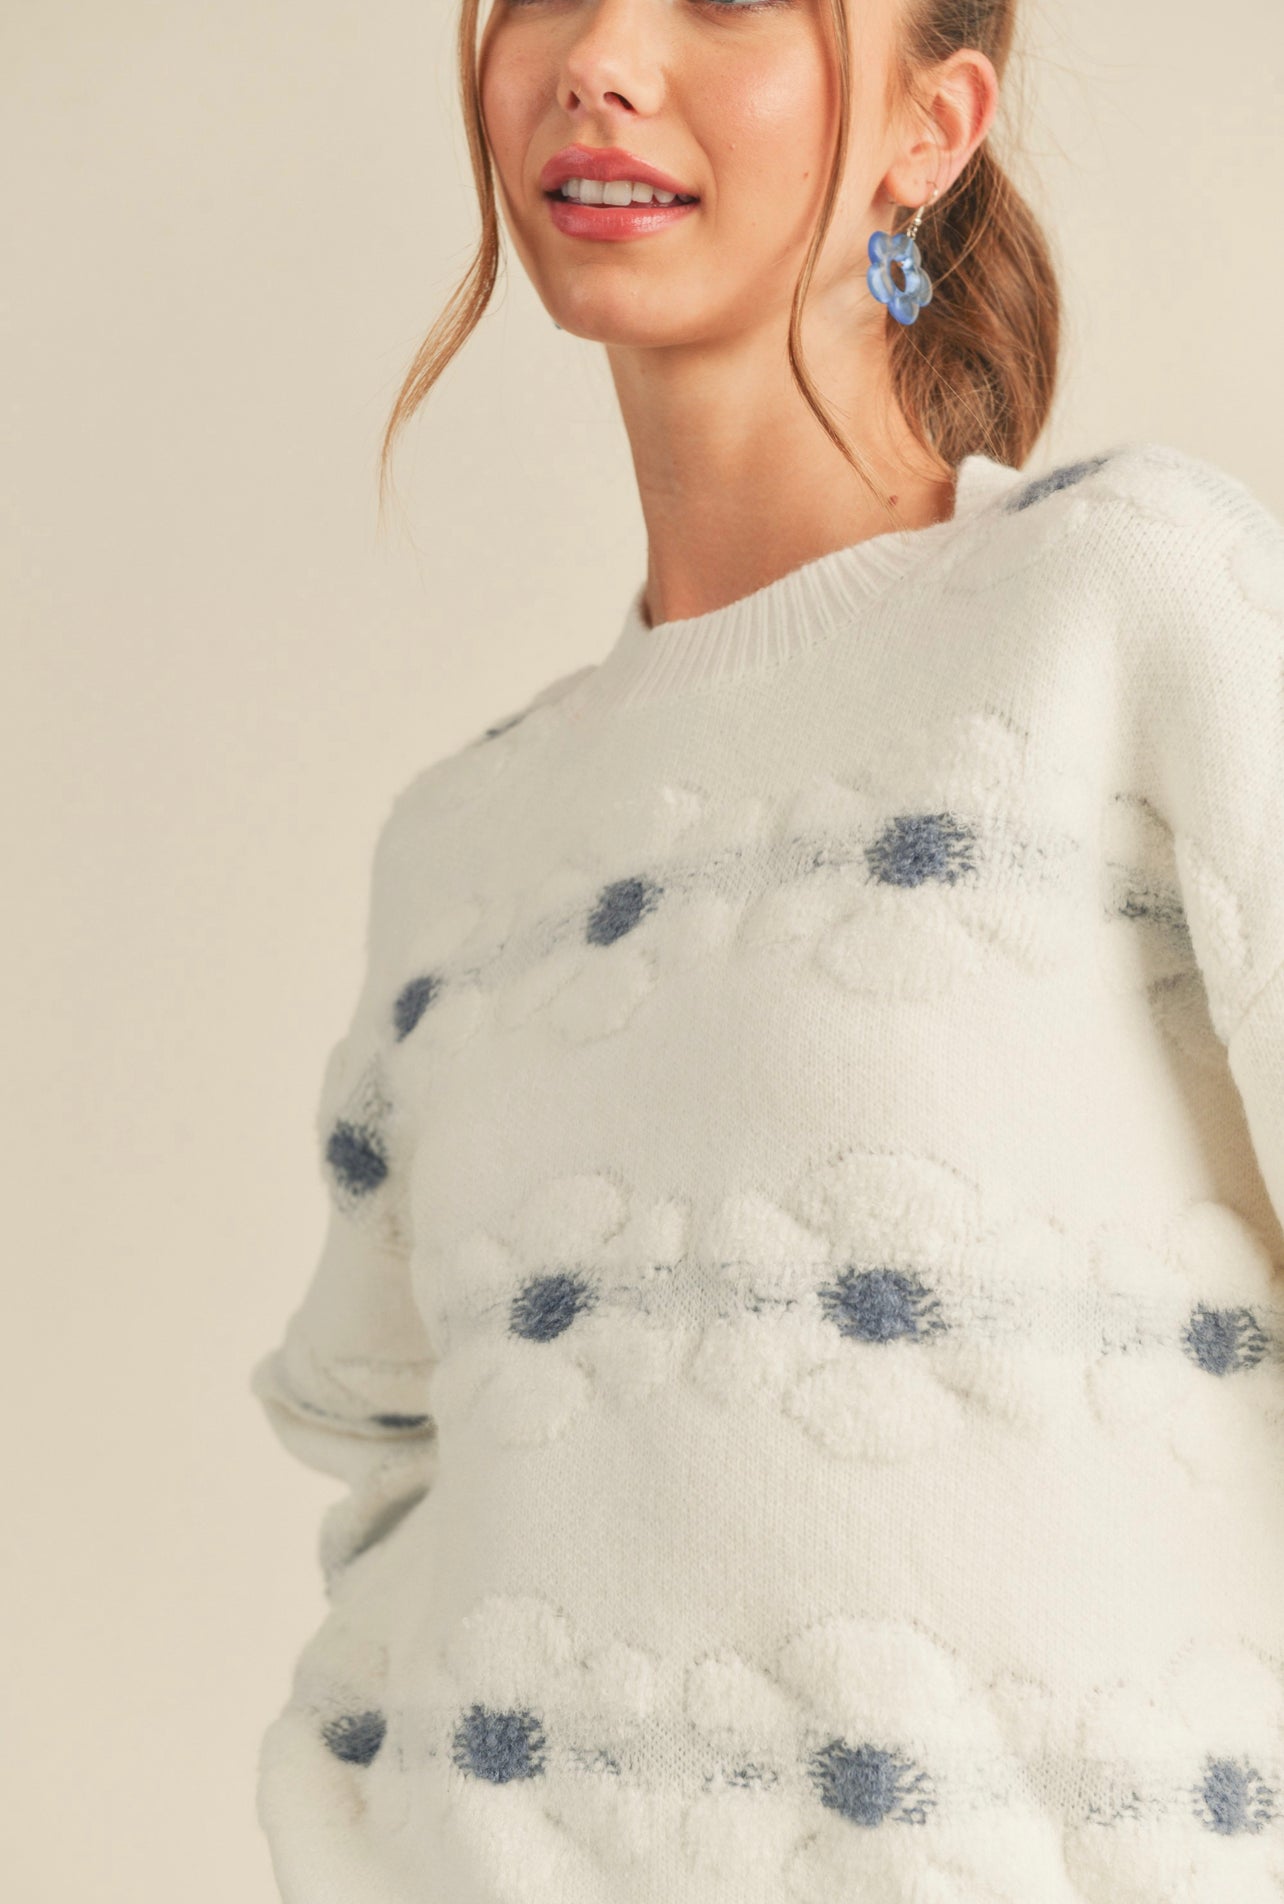 Snuggled Daisy Days Sweater